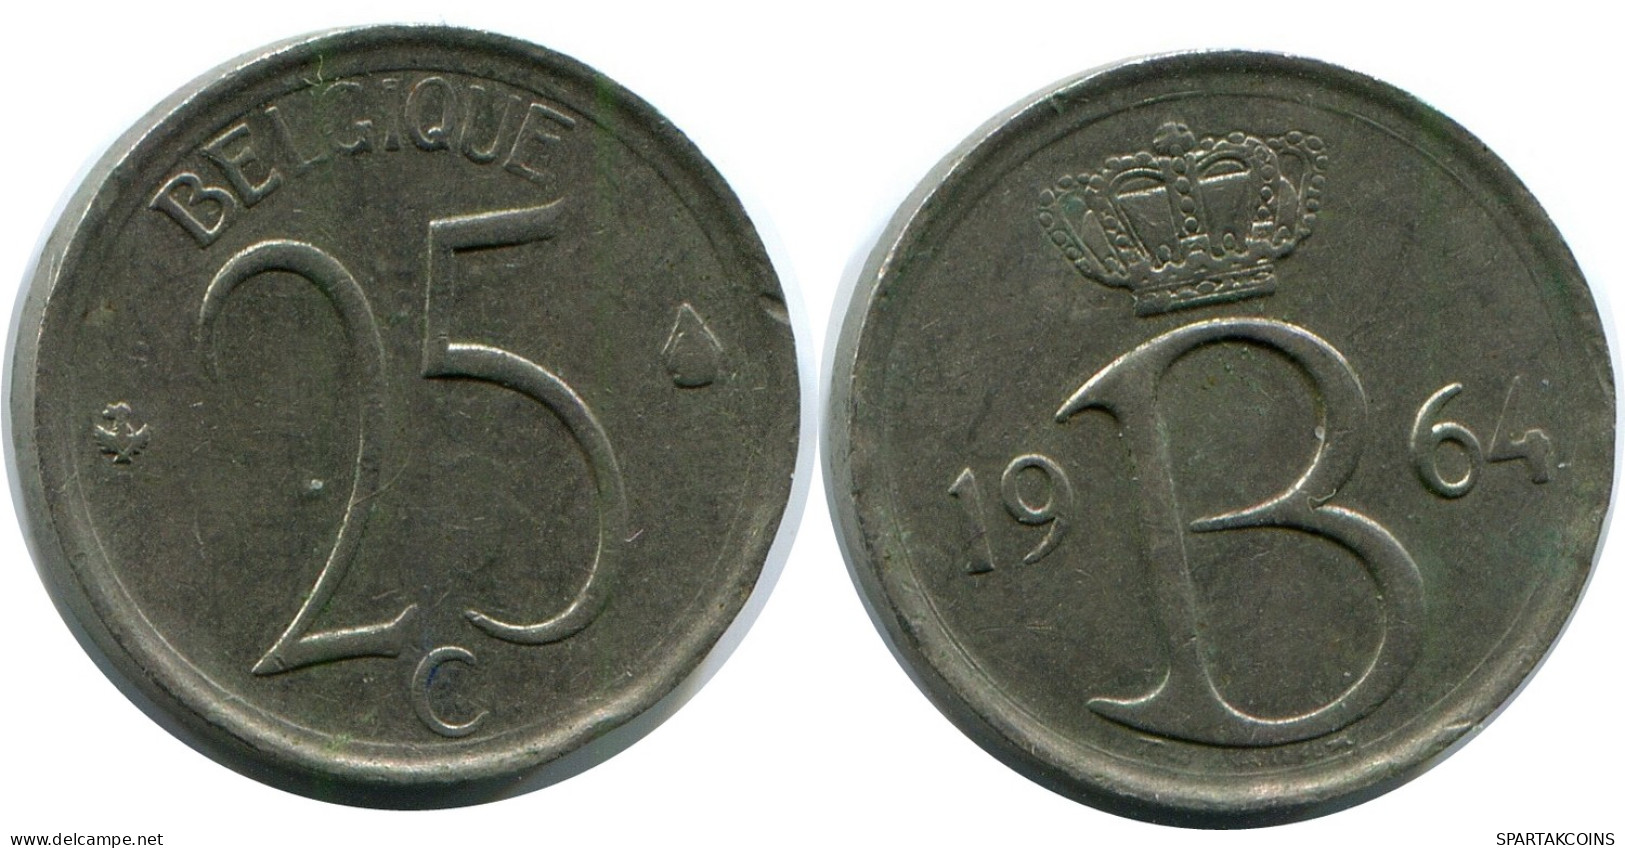 25 CENTIMES 1964 BELGIUM Coin #AH834.1.U - 25 Centimes